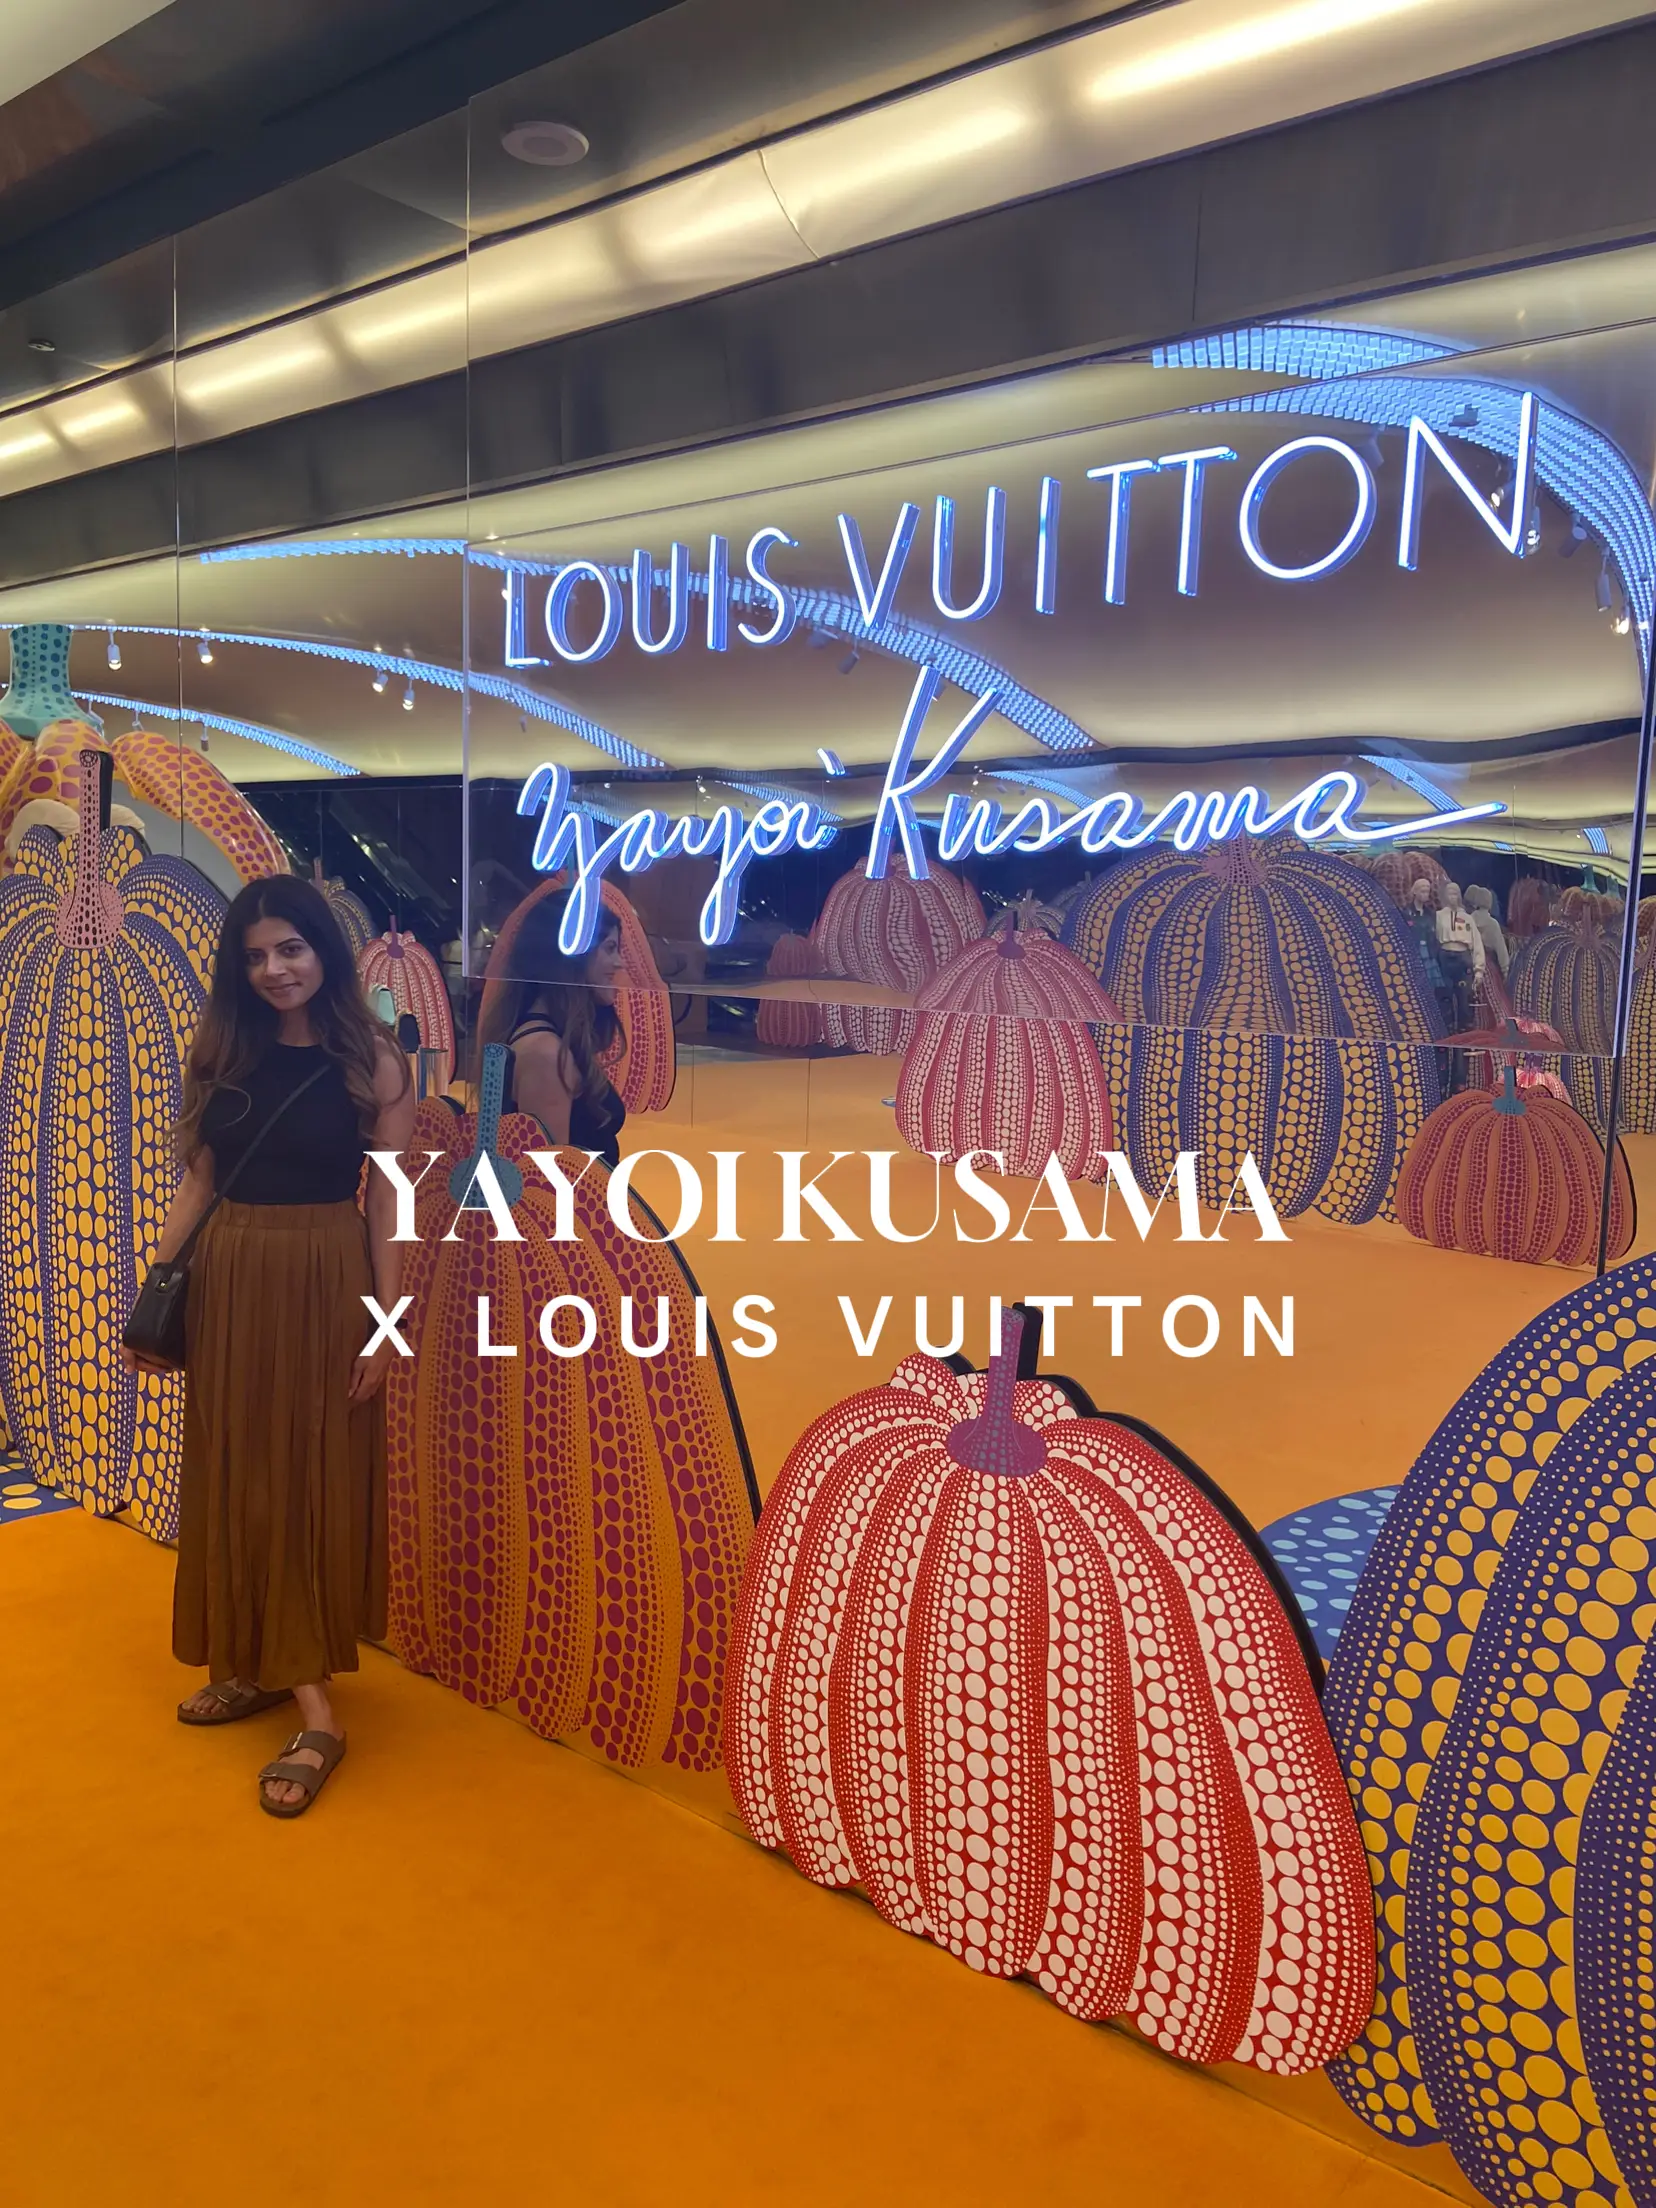 Louis Vuitton - Yayoi Kusama installations - Luxury Travel Magazine